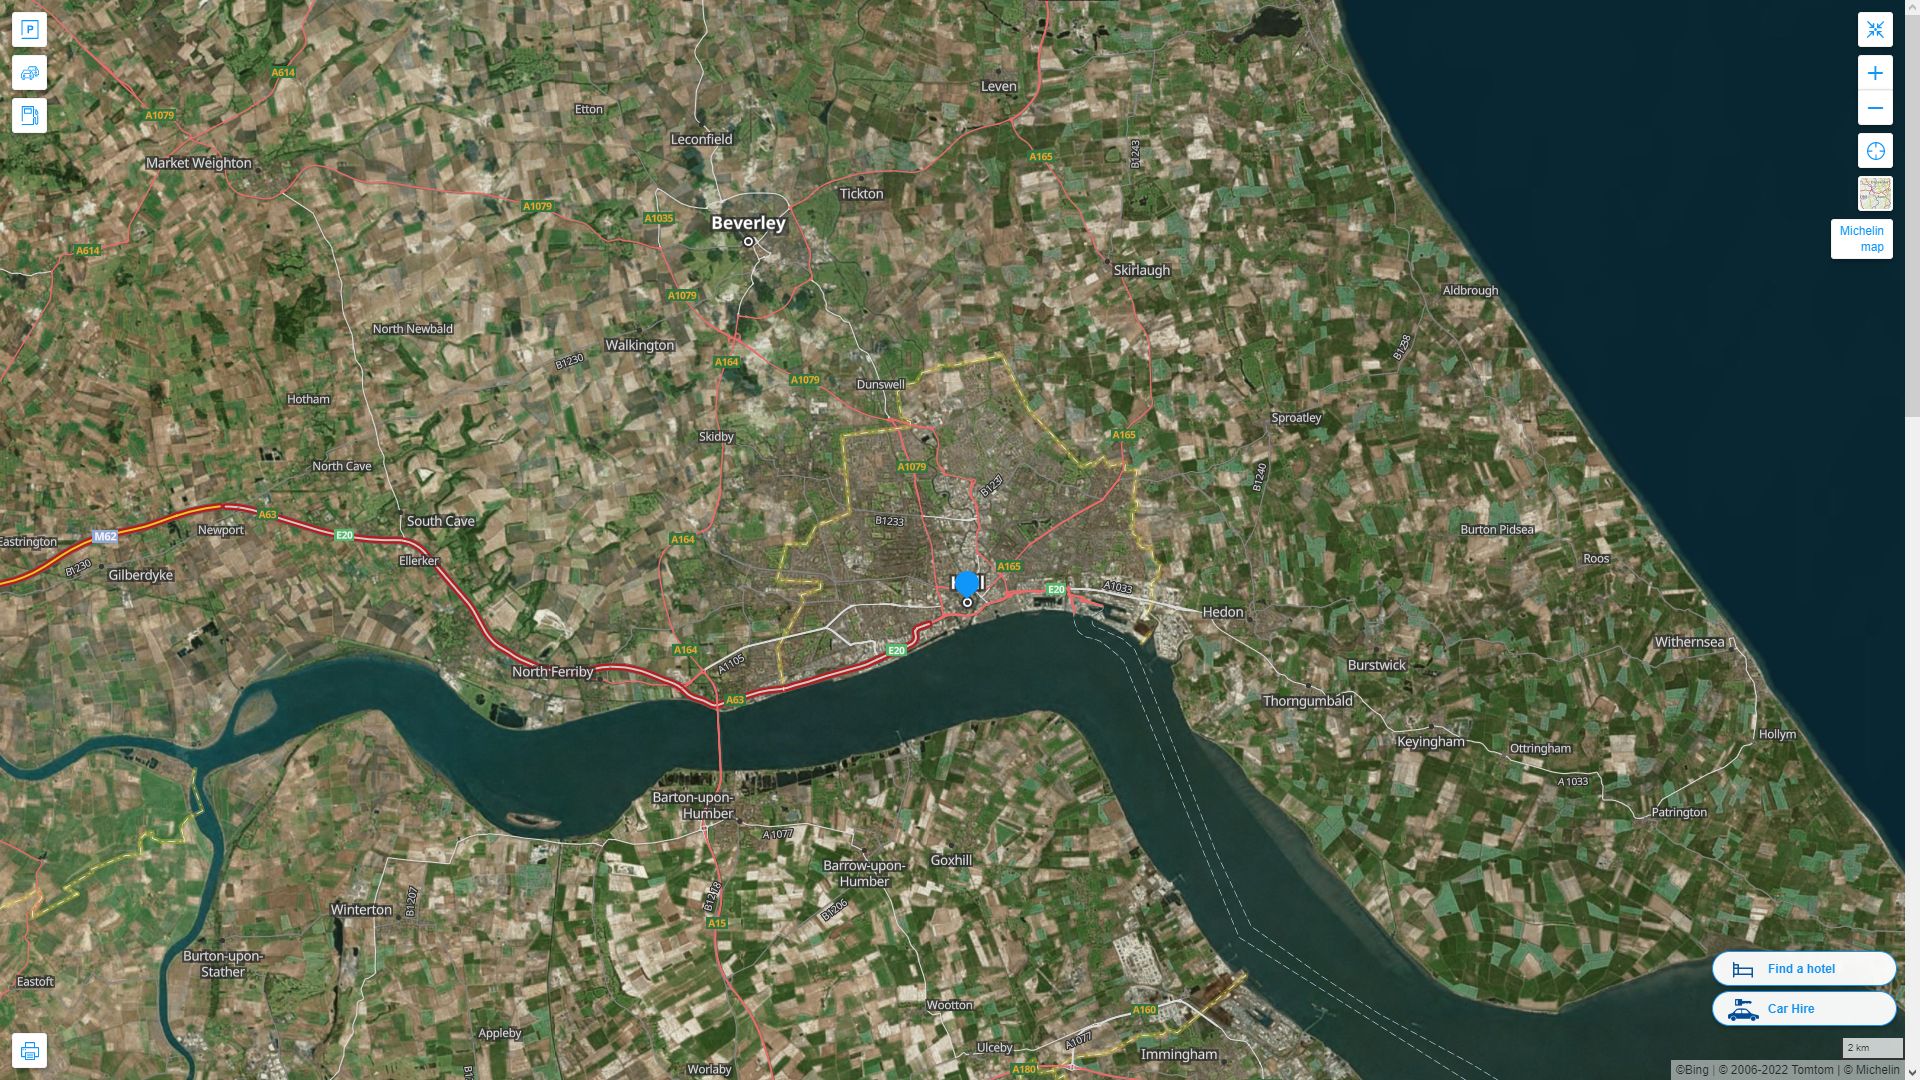 Kingston Upon Hull Royaume Uni Autoroute et carte routiere avec vue satellite